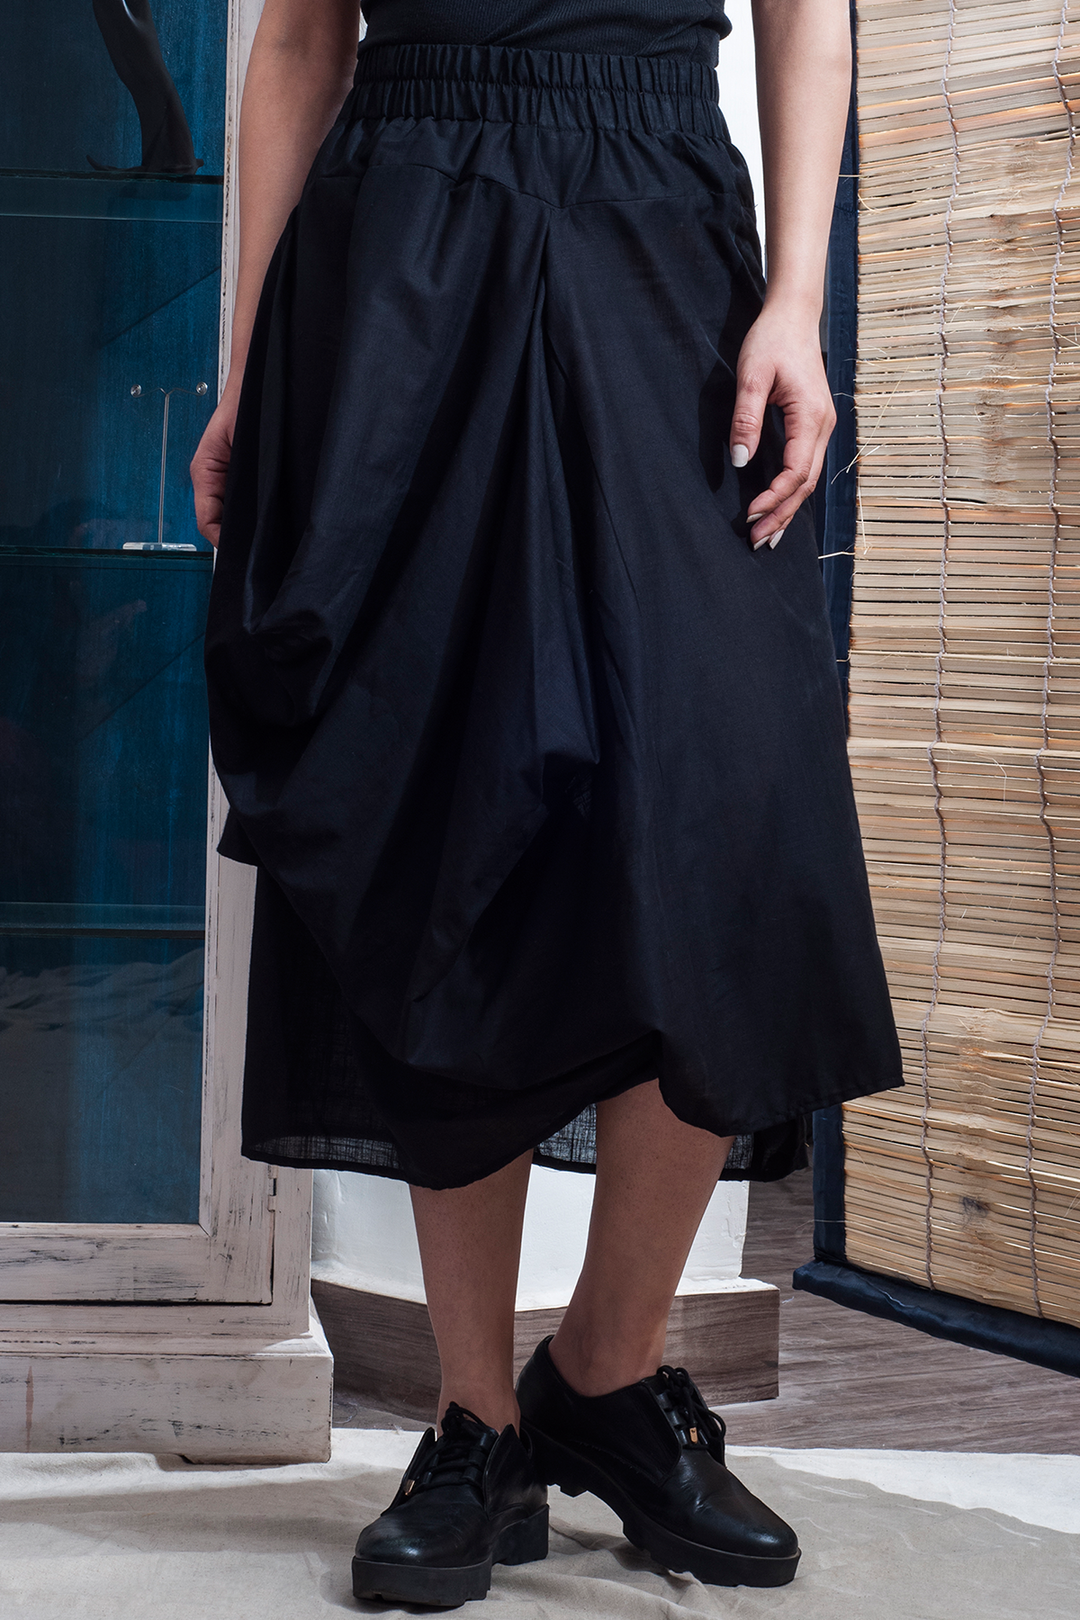 Rocko - Black Asymmetric Cowl Dress